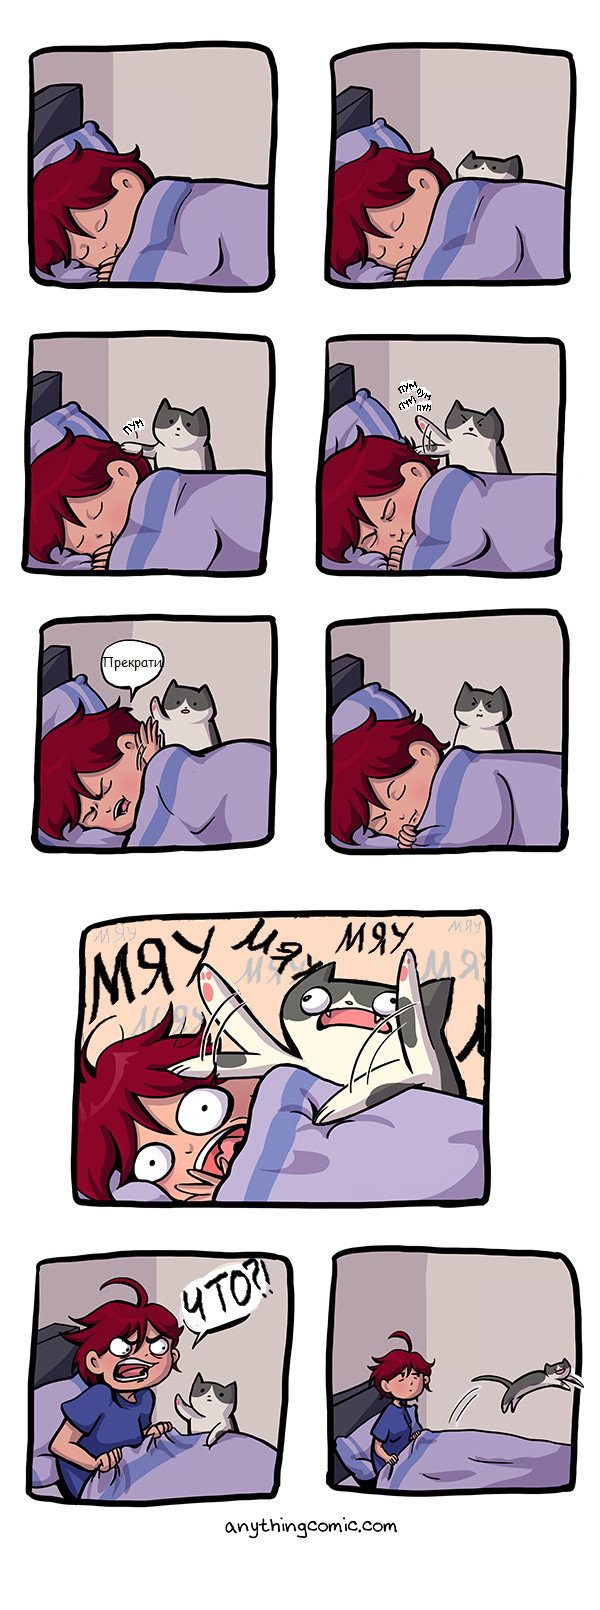 Morning alarm... - Anythingcomic, Comics, cat, Alarm, Longpost